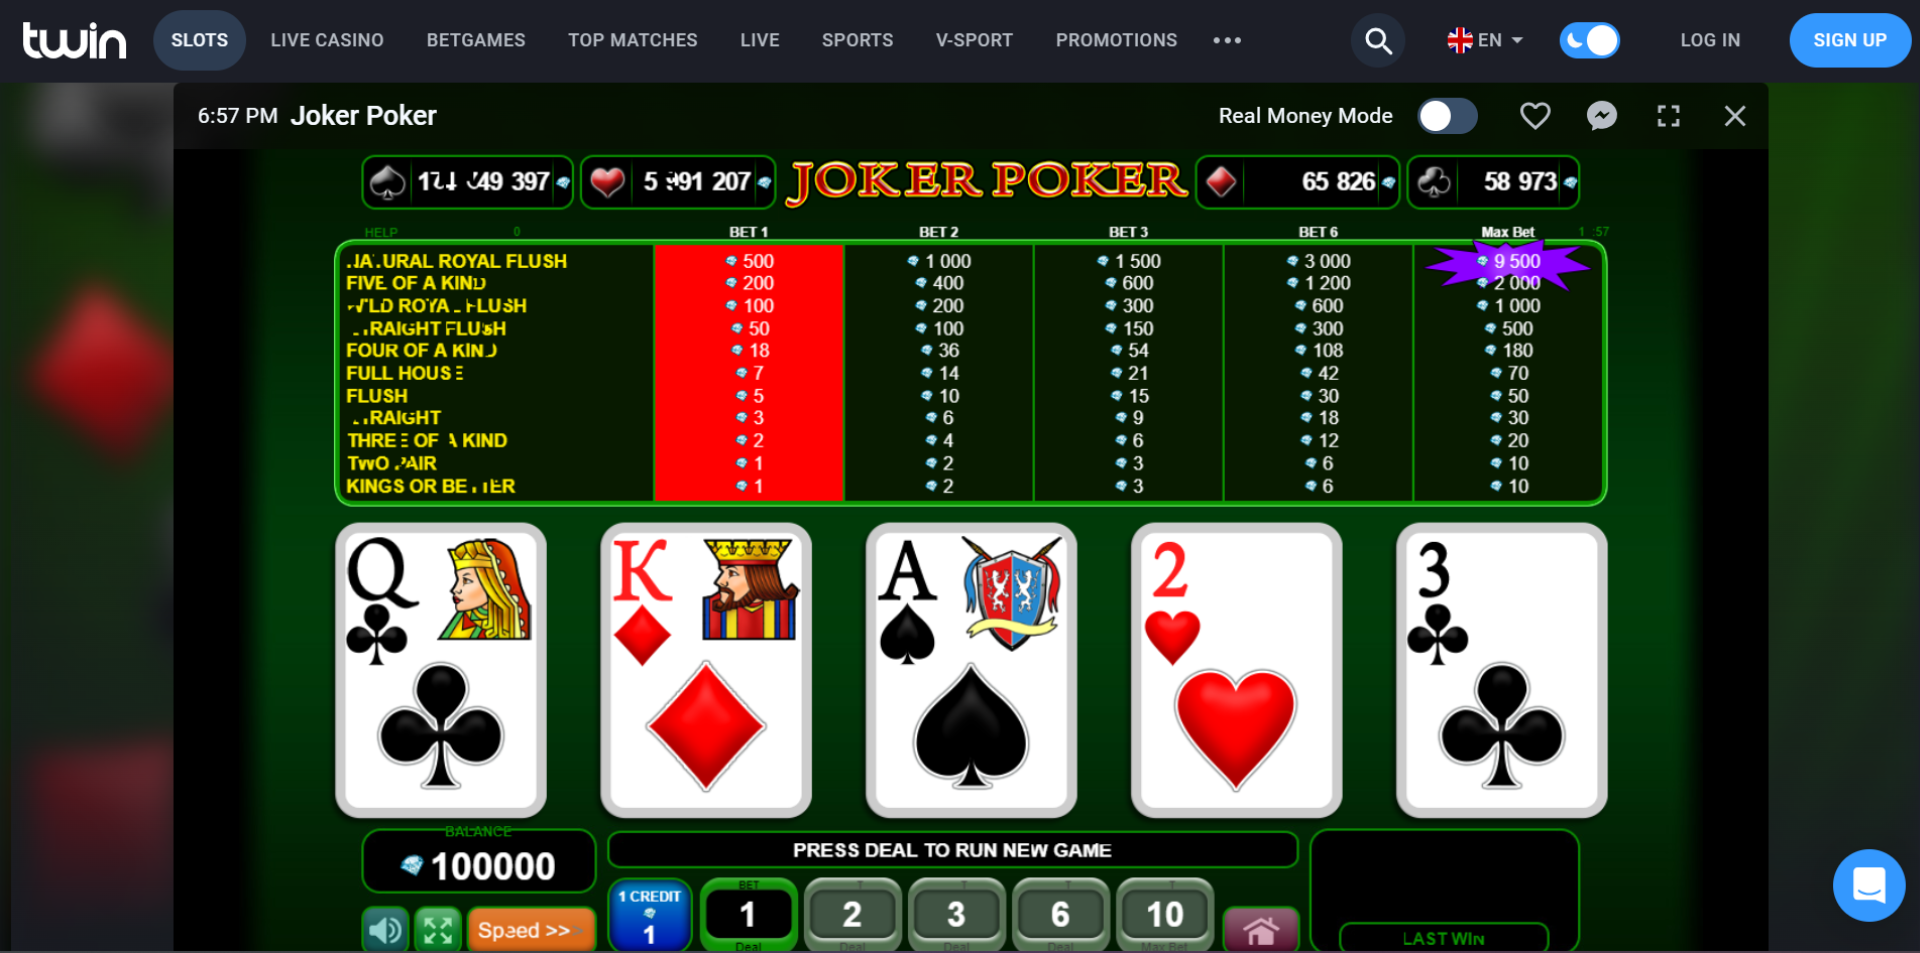 twin casino poker